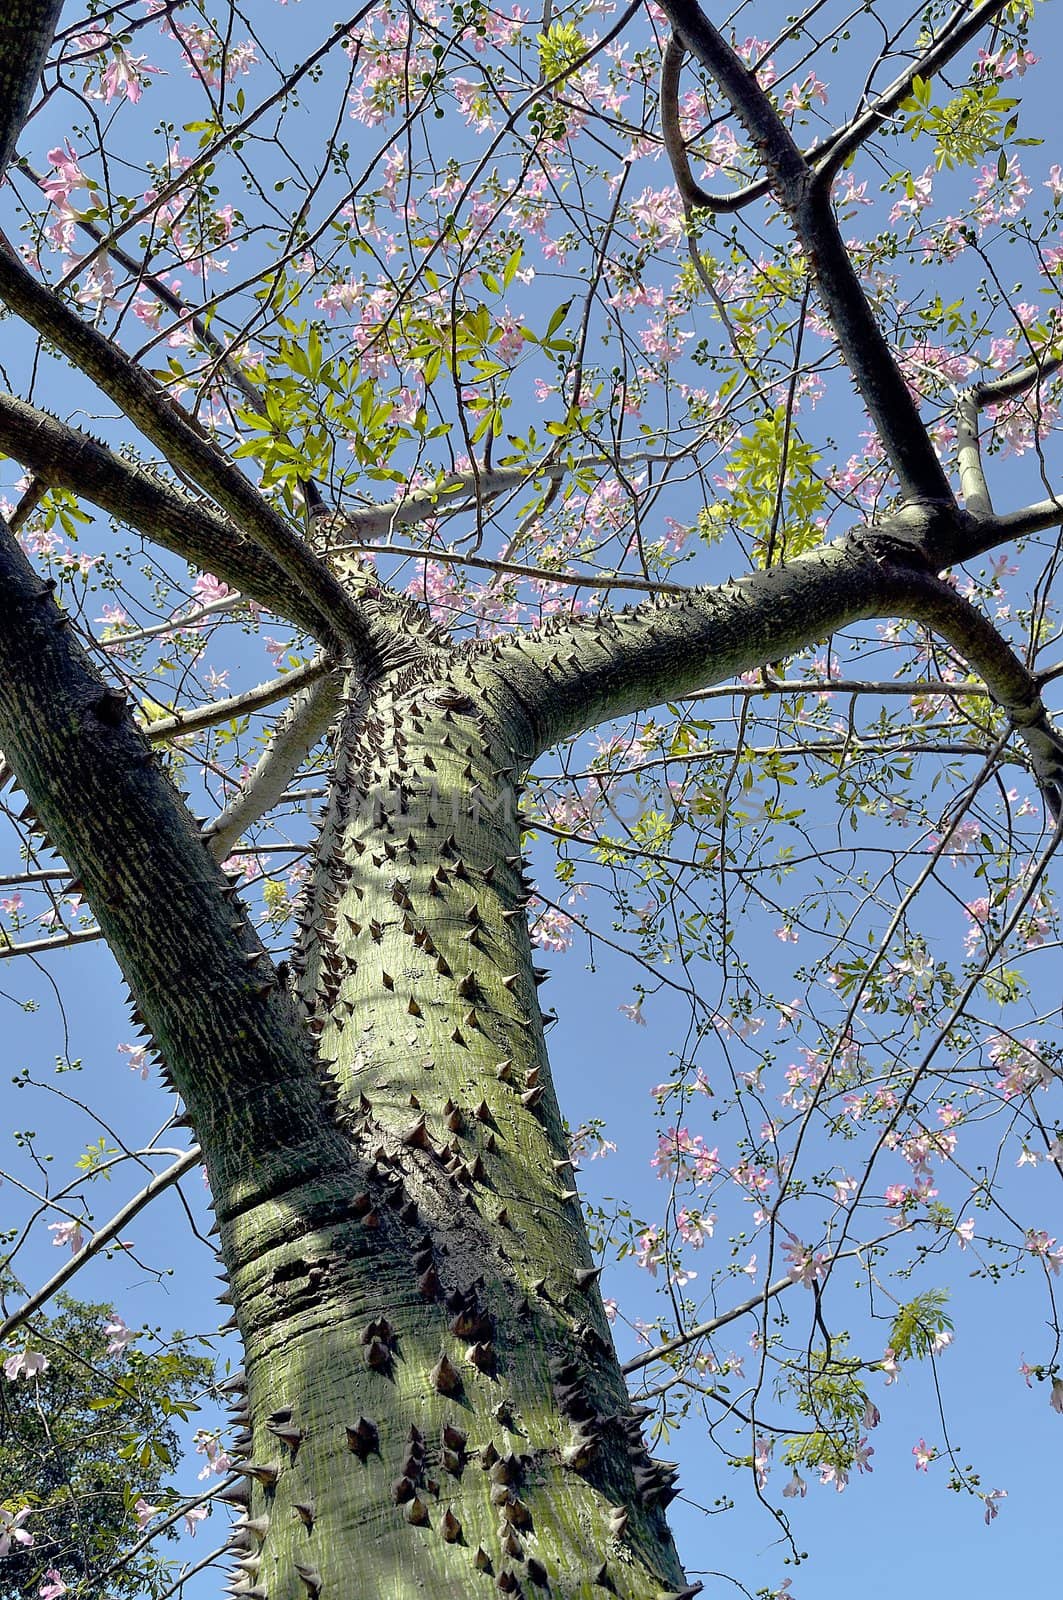 Thorns on a Silk Floss Tree by fernando2148